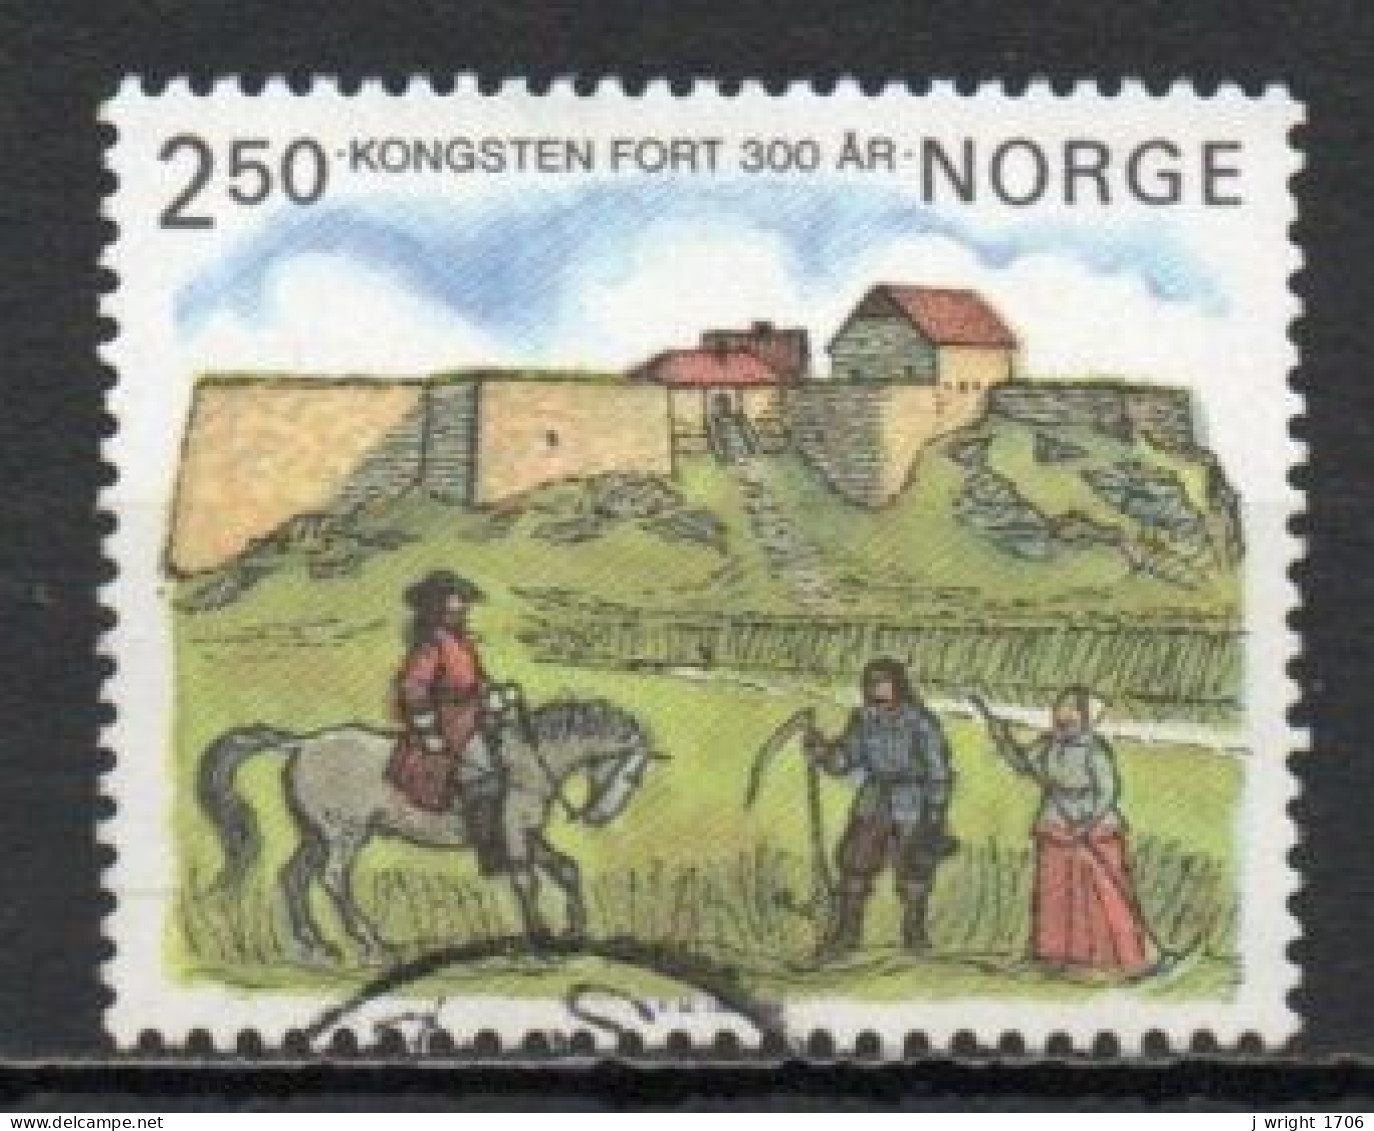 Norway, 1985, Kongsten Fort 300th Anniv, Set, USED - Usati